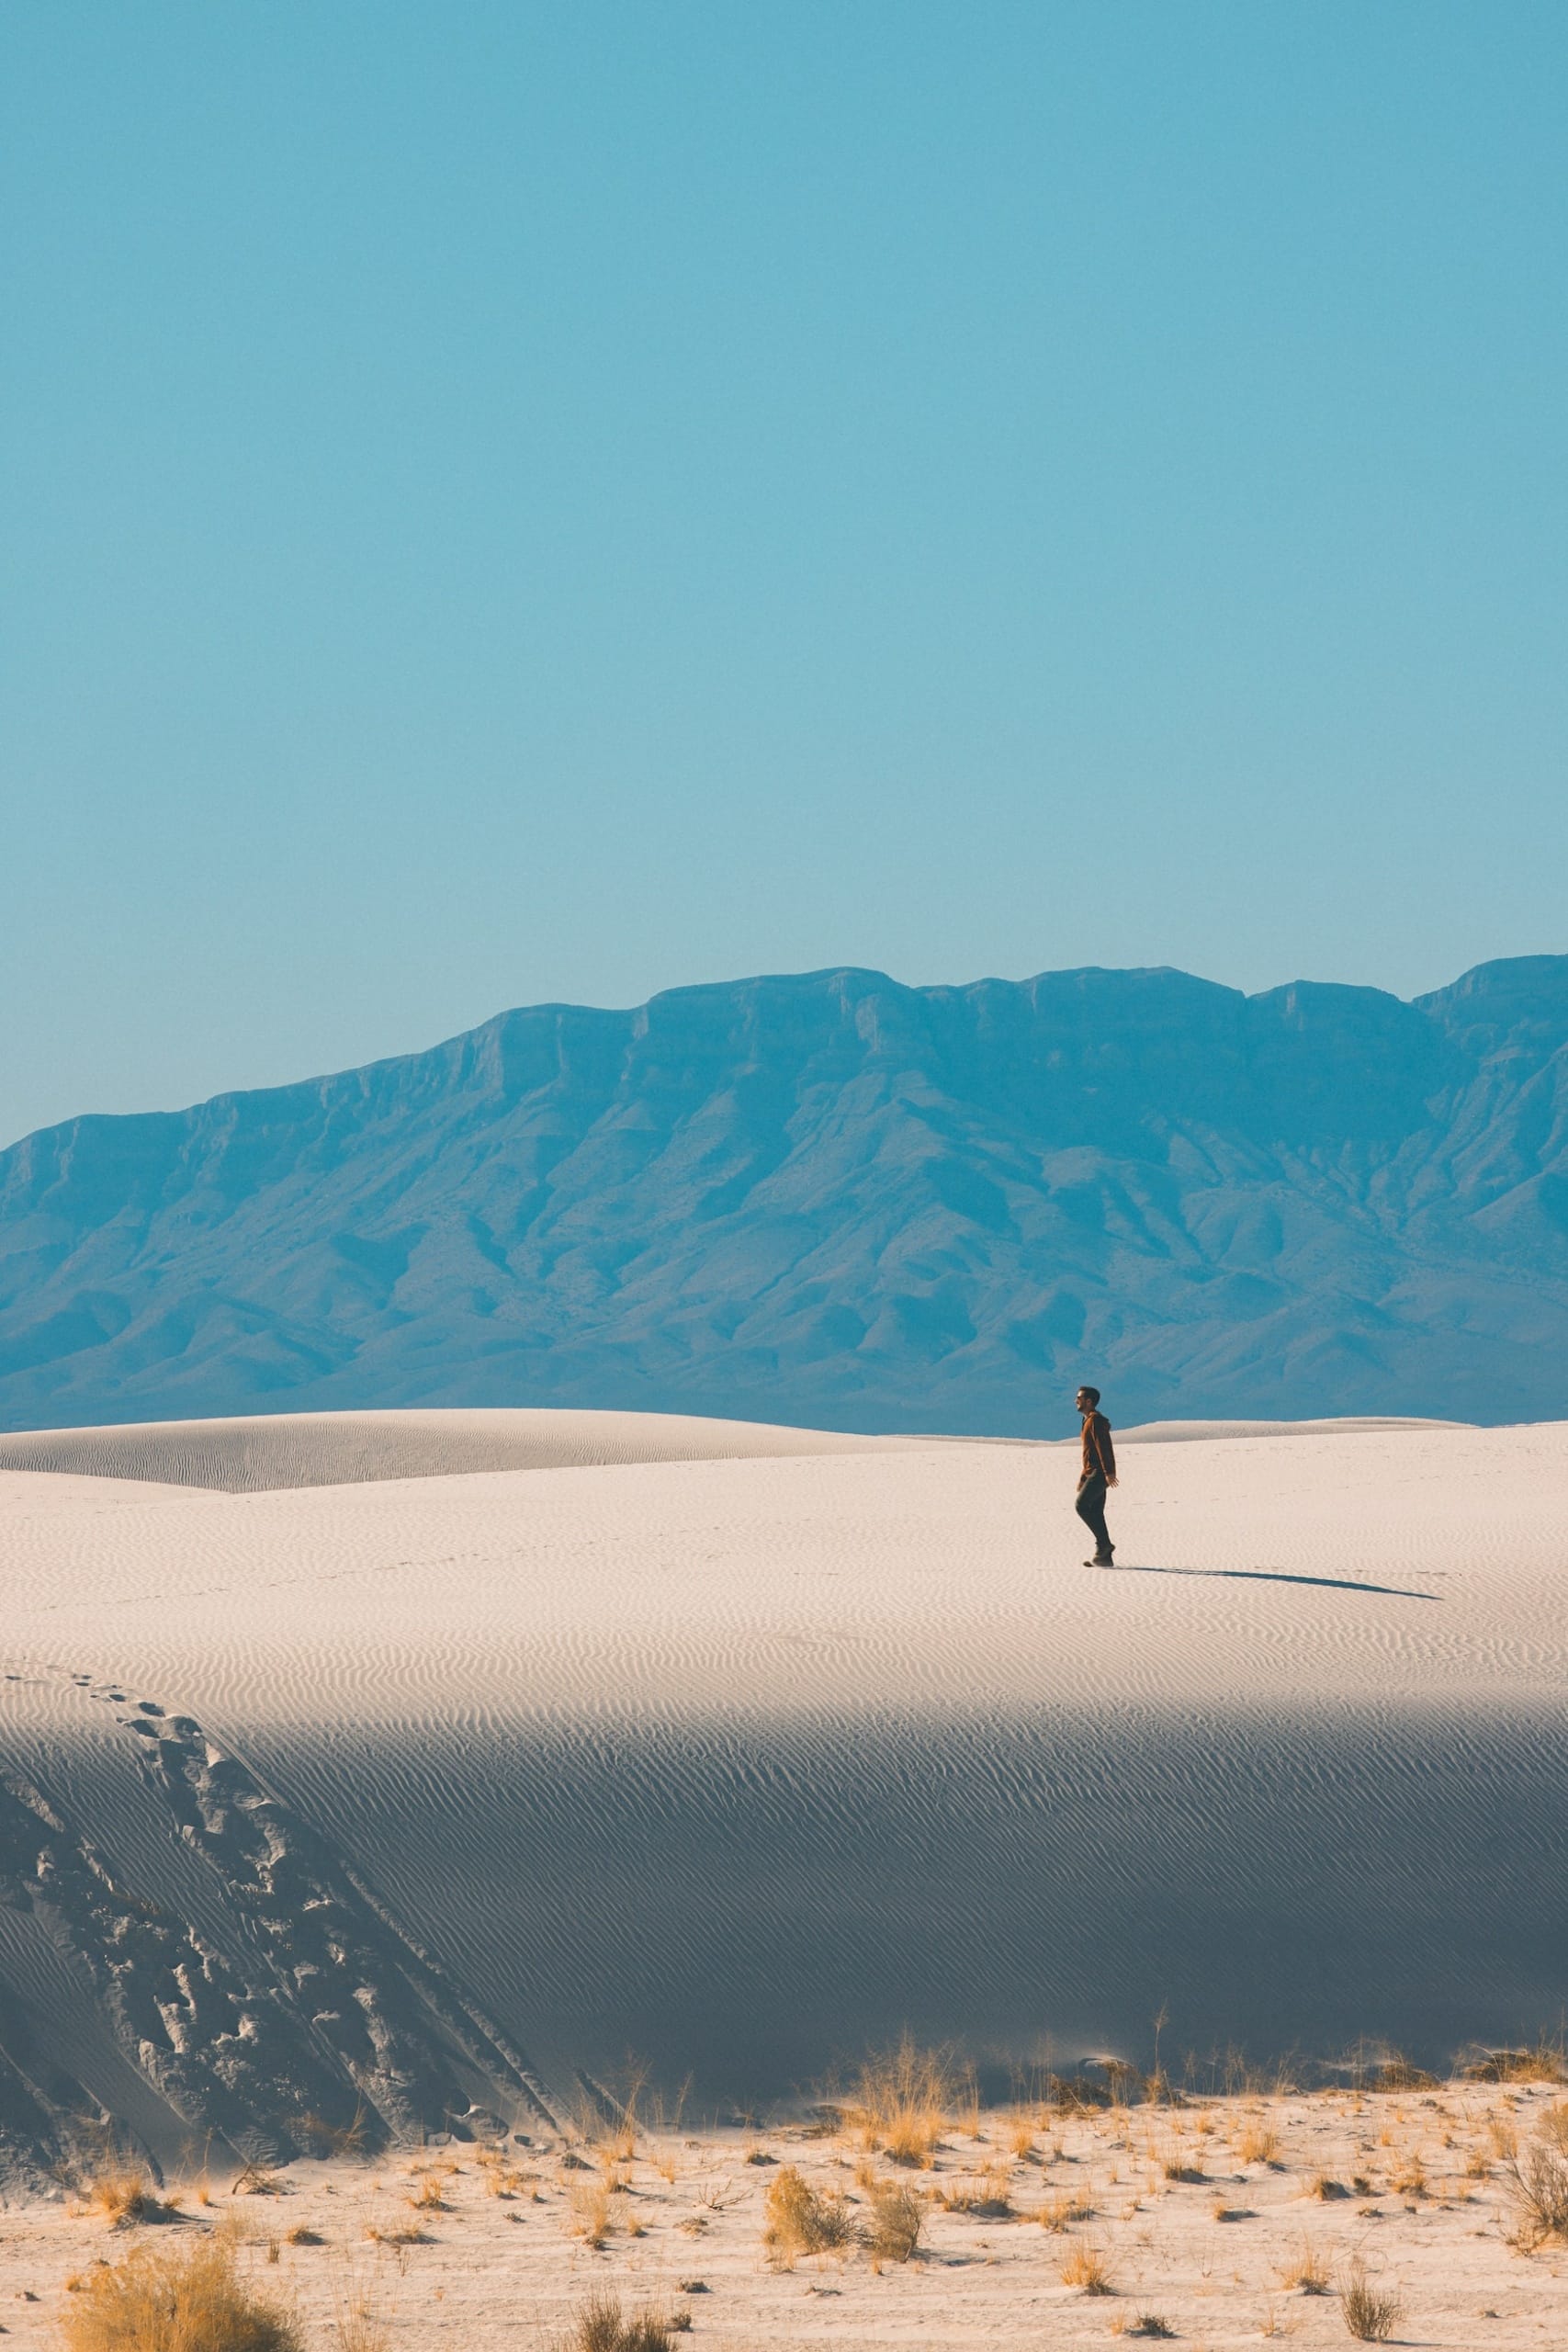 unbekannte Nationalparks in den USA: White Sands in New Mexico